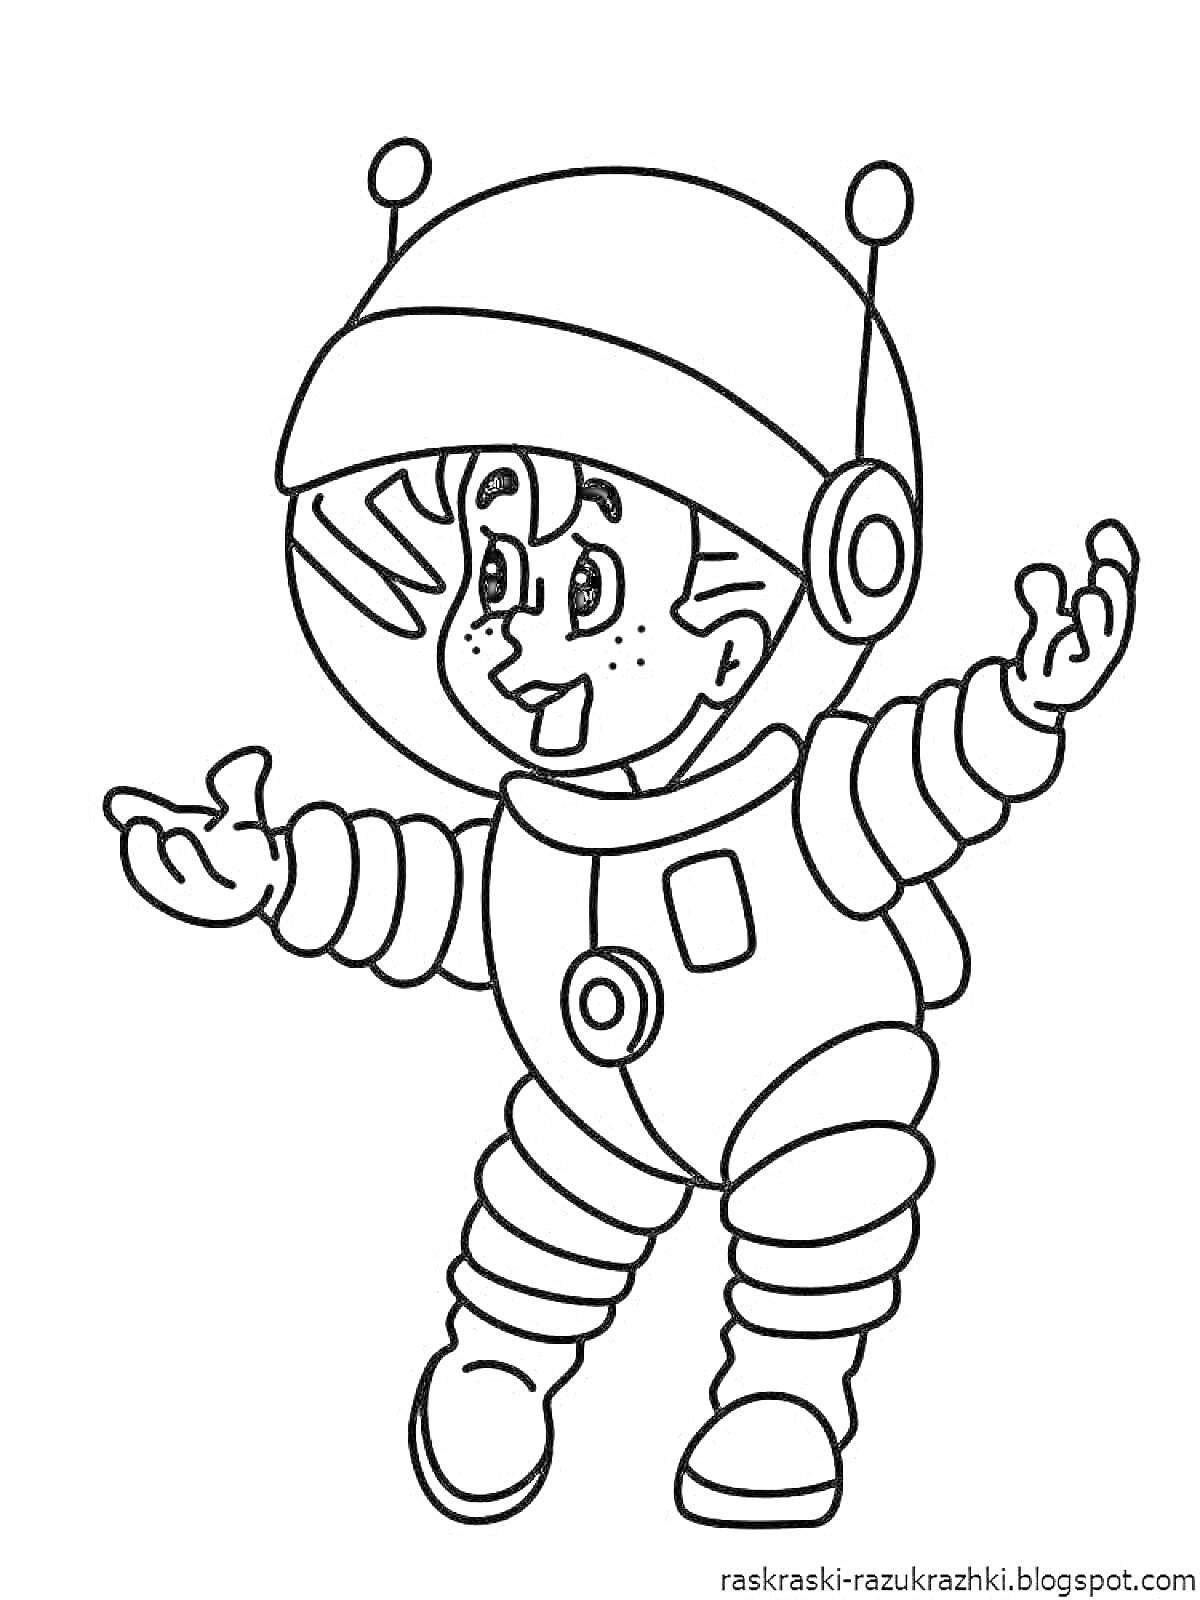 Раскраска Космонавт с антеннами на шлеме и в скафандре